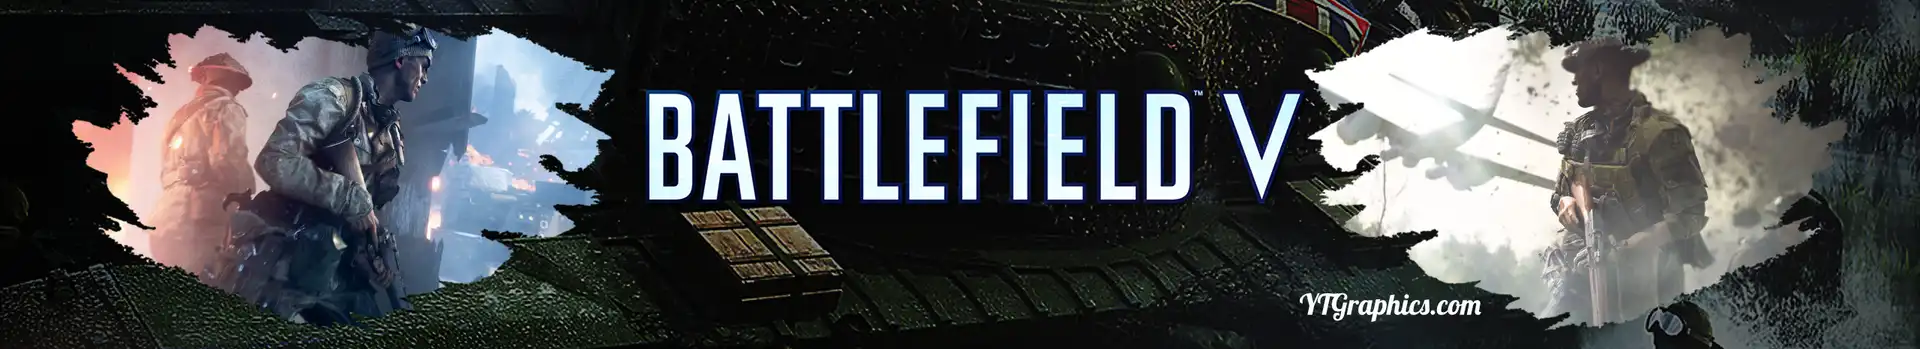 Battlefield V preview